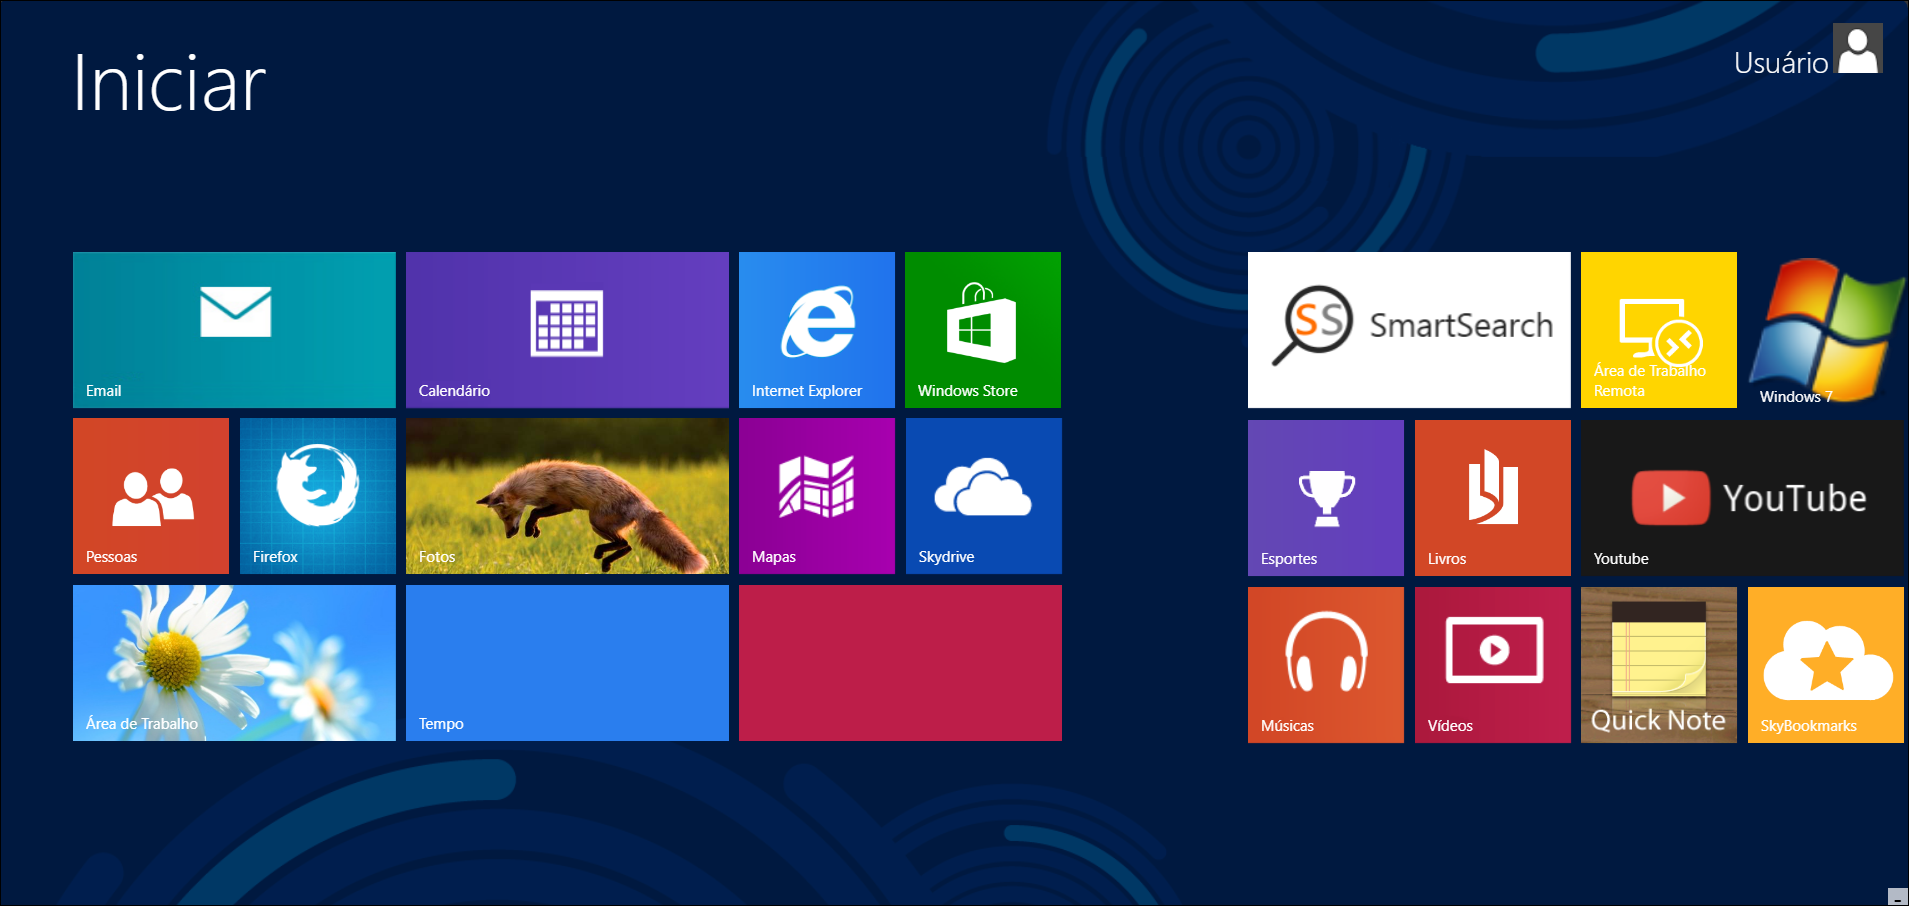 Windows 8 home screen showing Metro UI's tiled interface